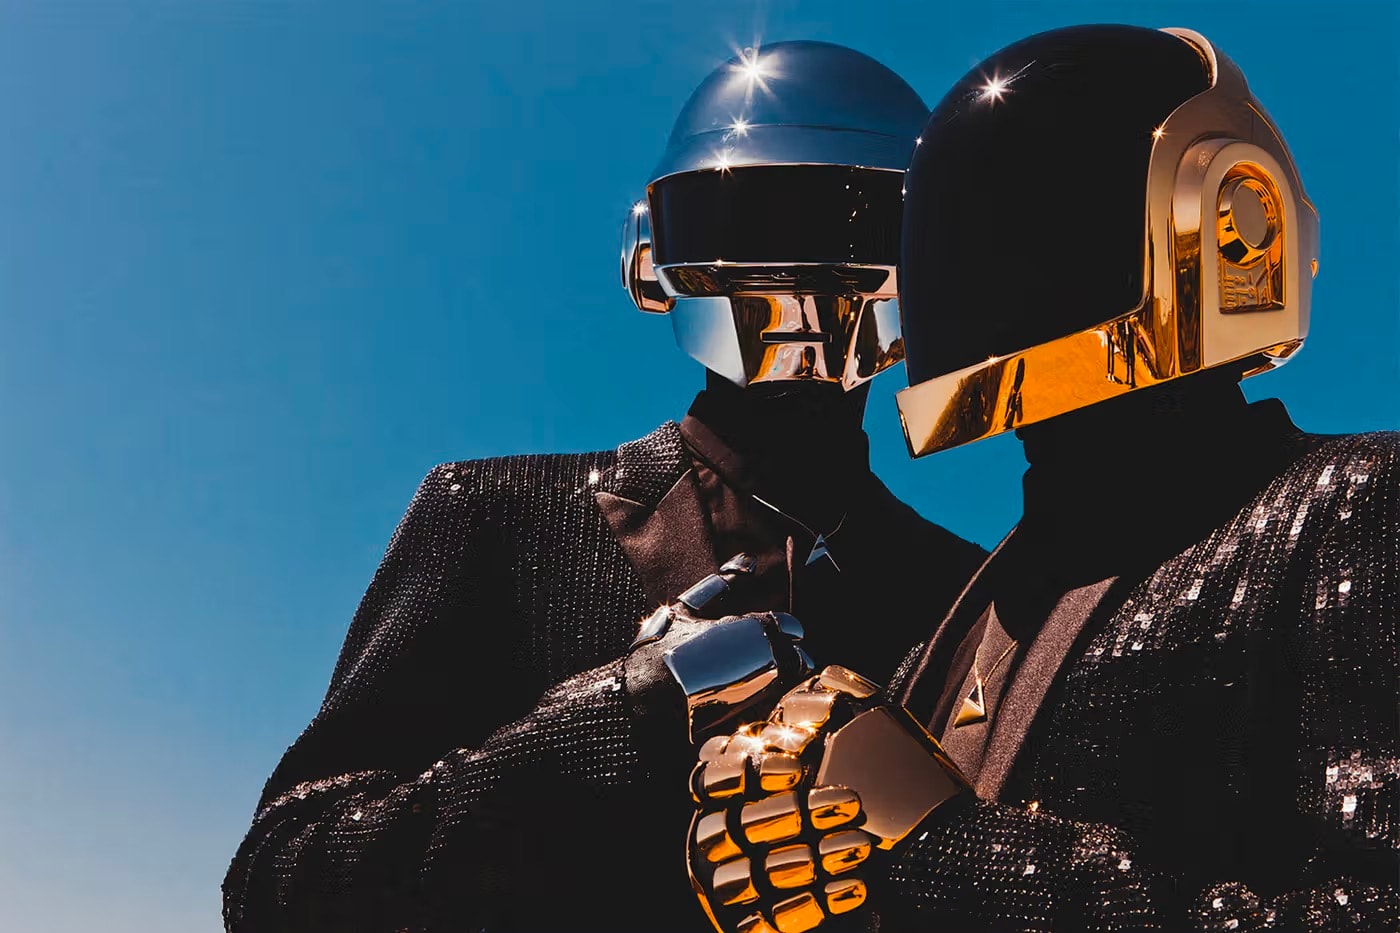 Thomas Bangalter 揭示 Daft Punk 解散原因